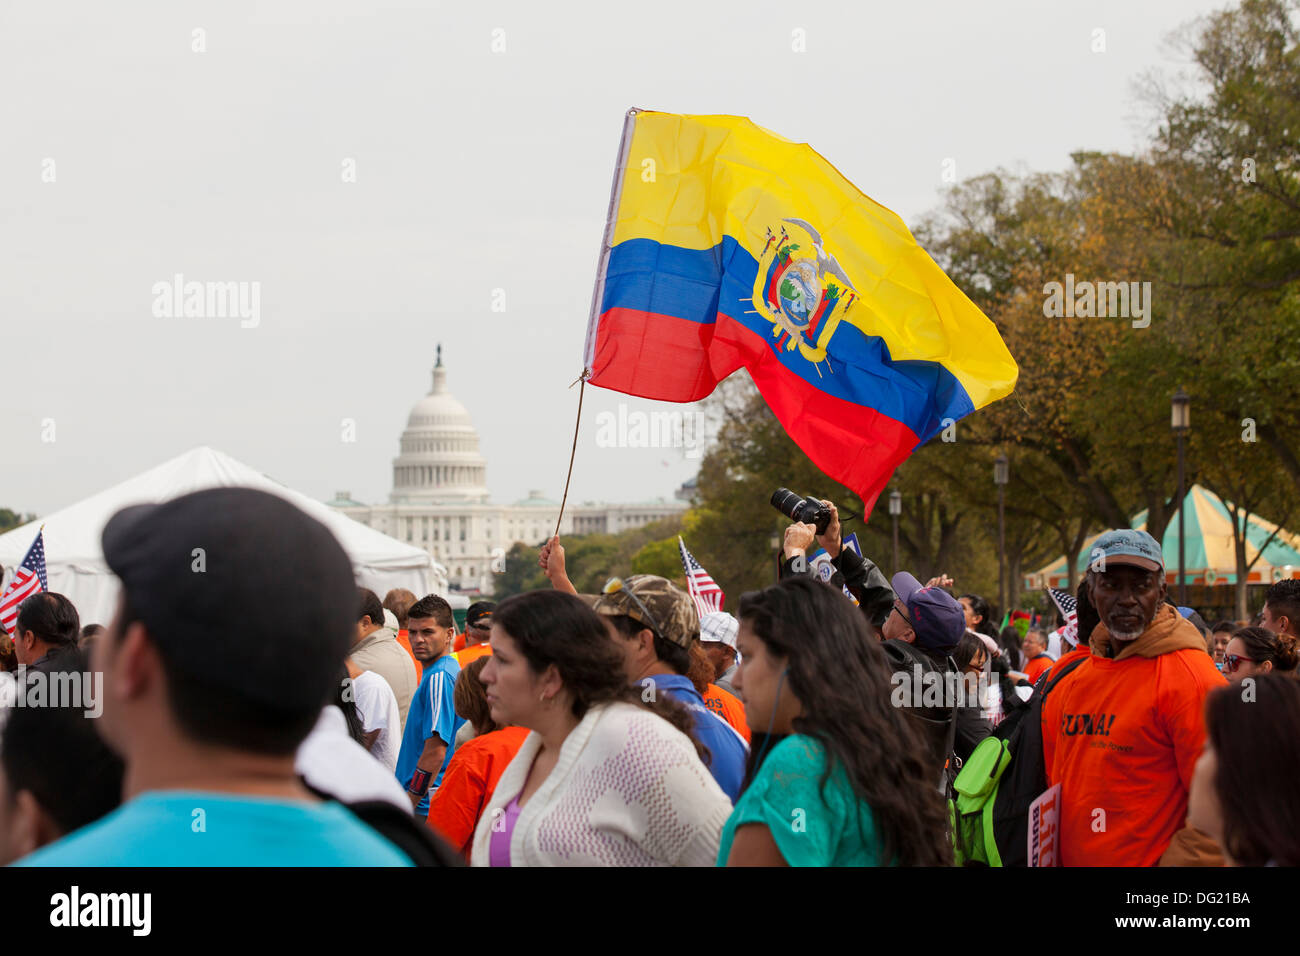 Man waving an Ecuadorian flag at Immigration Reform rally - Washington, DC USA Stock Photo